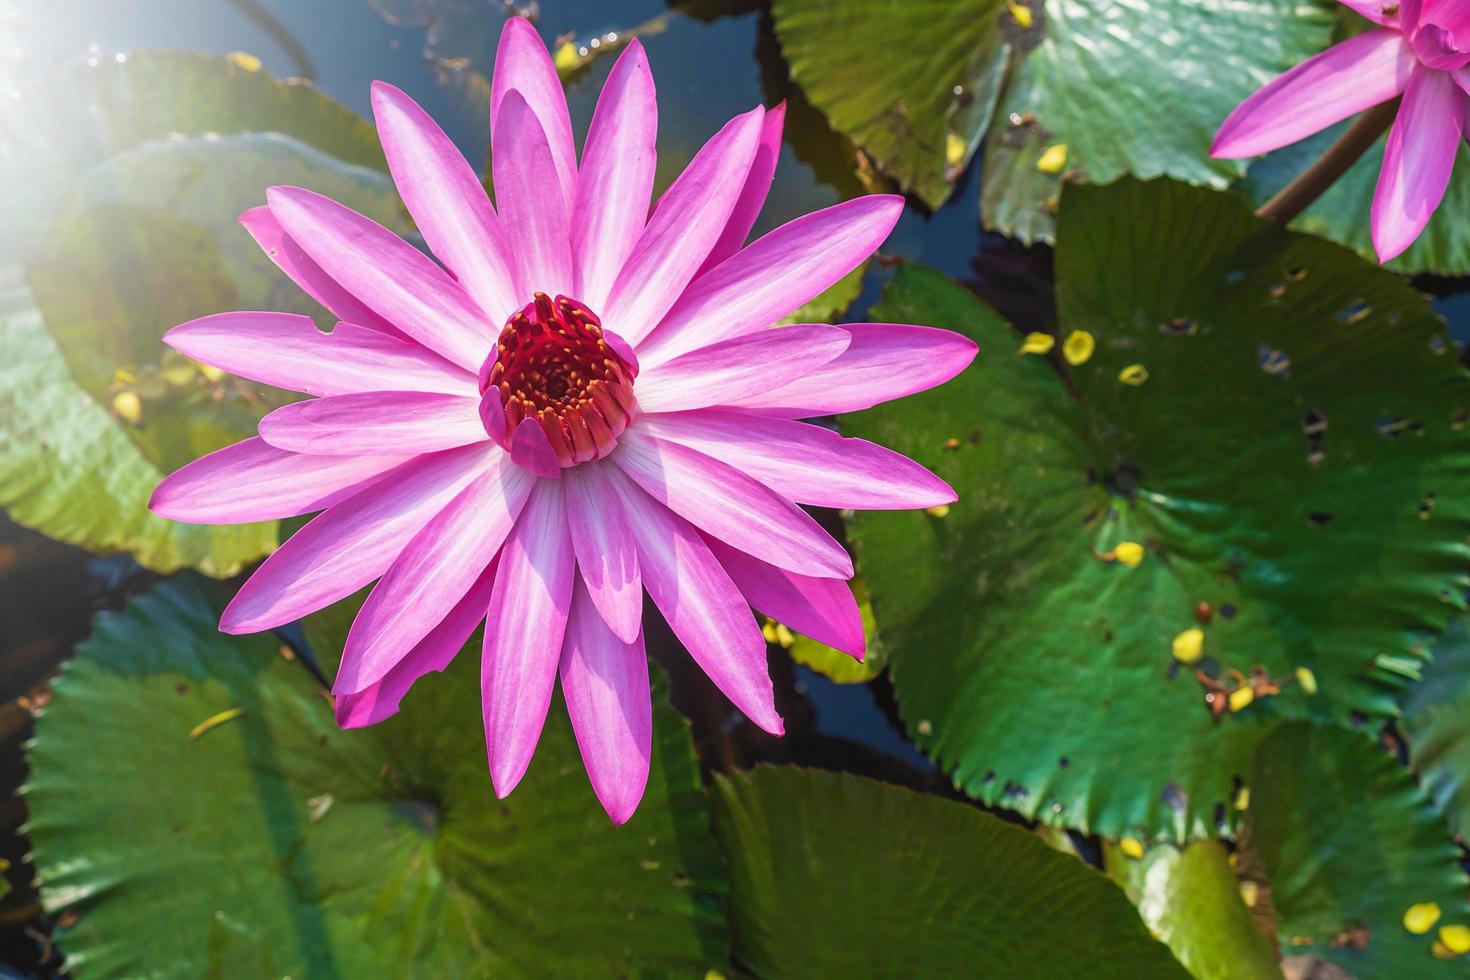 flor de loto rosa foto